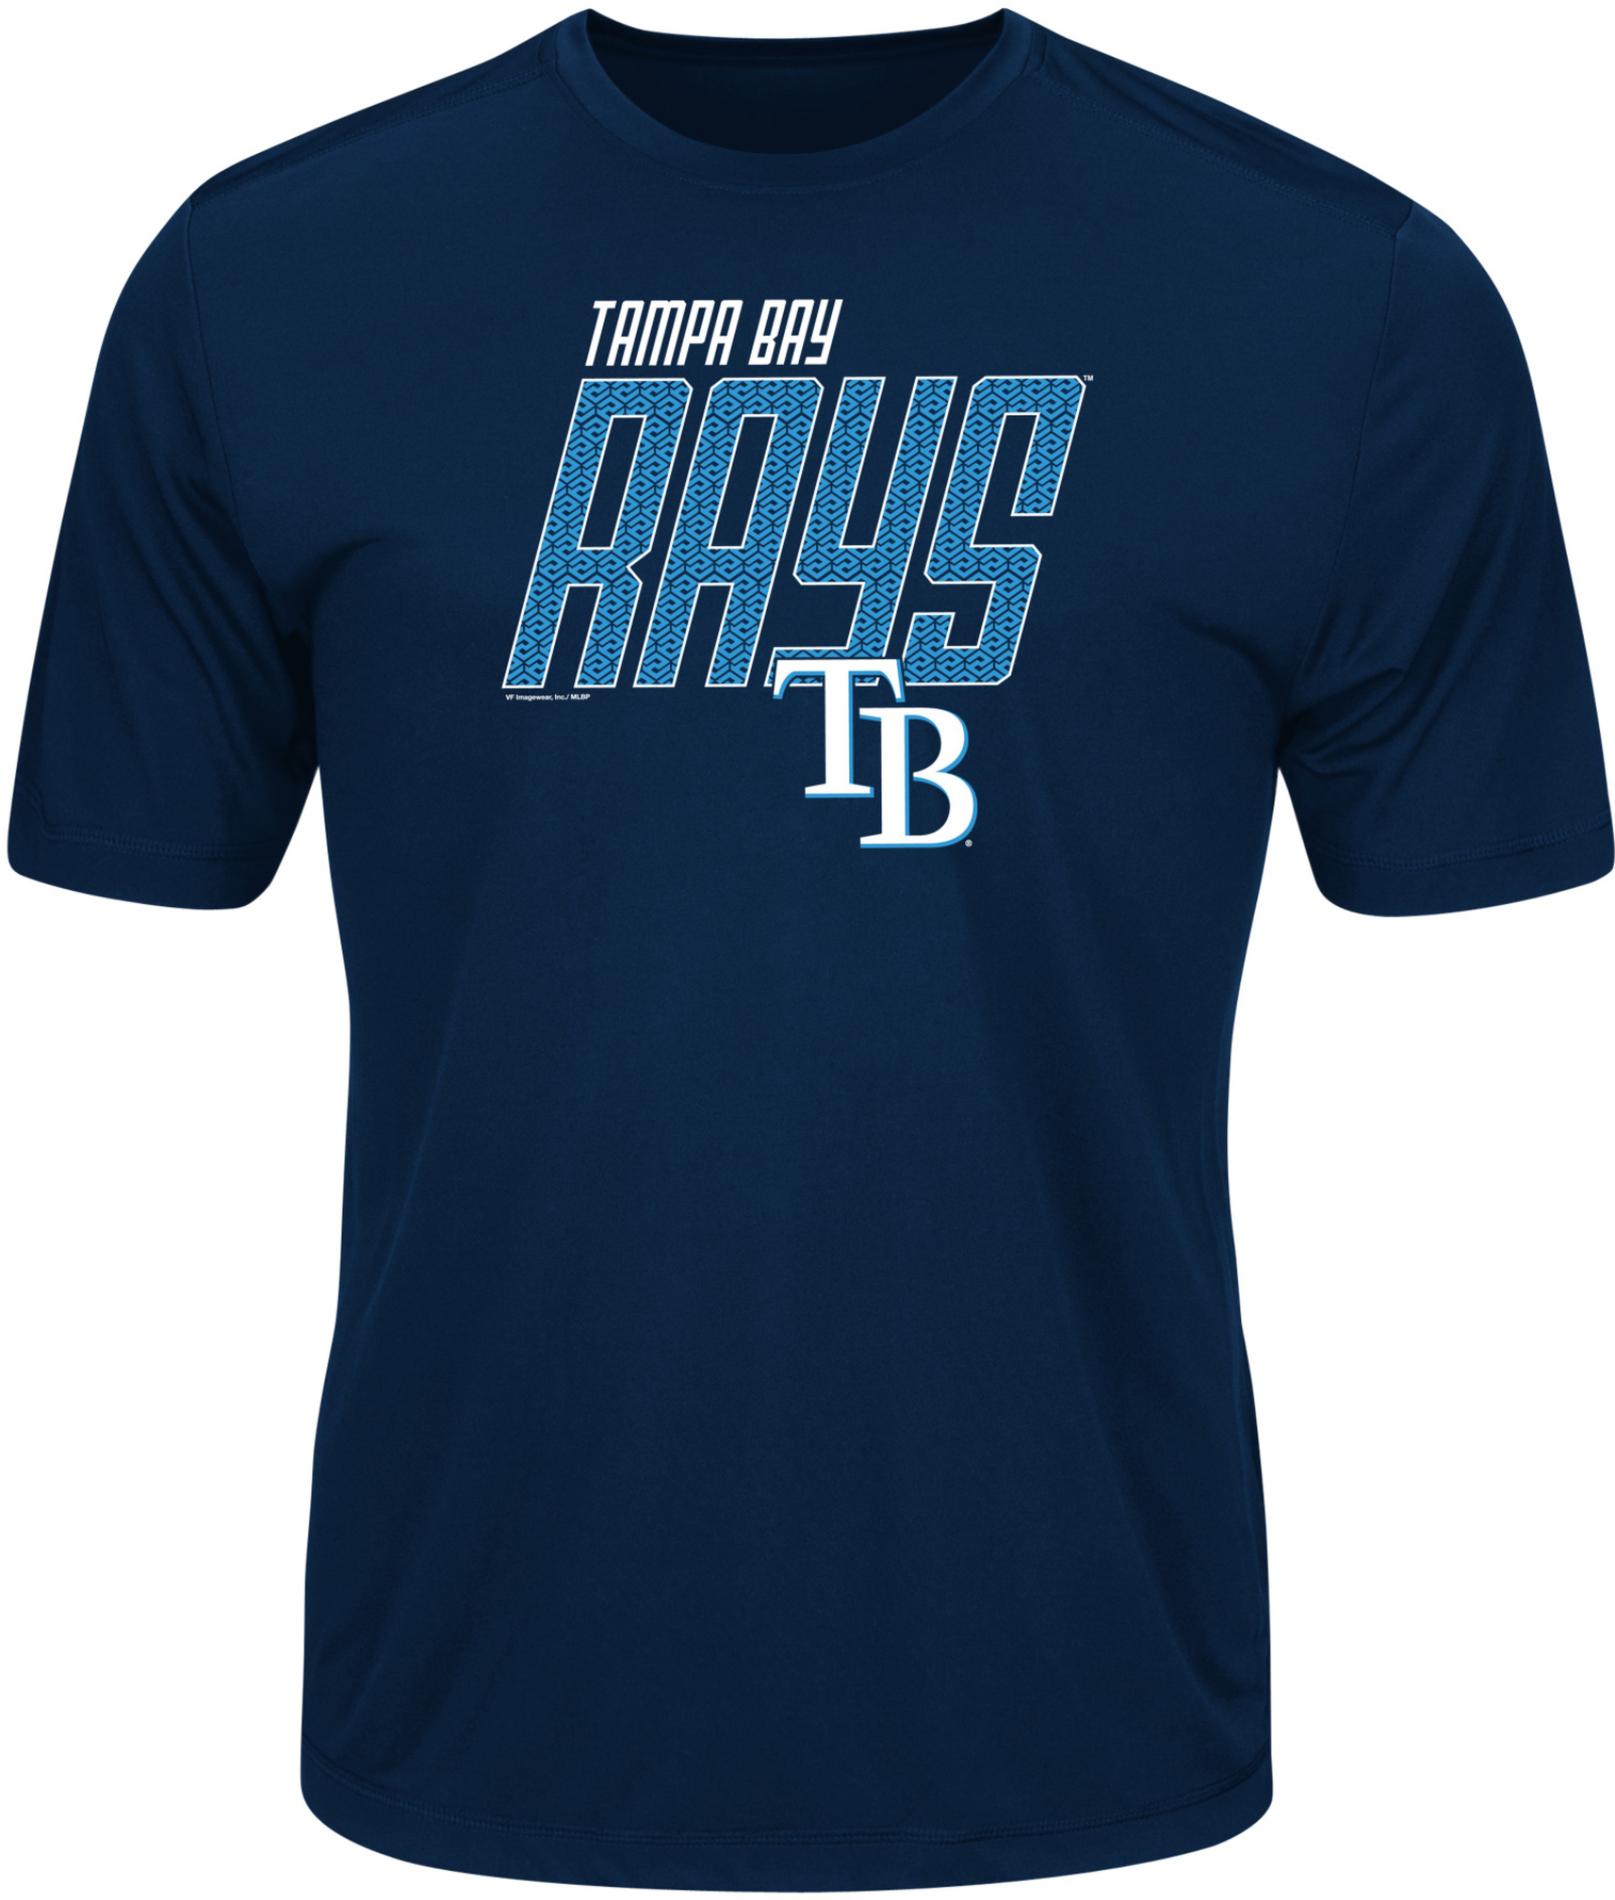 MLB Men's Graphic T-Shirt - Tampa Bay Rays